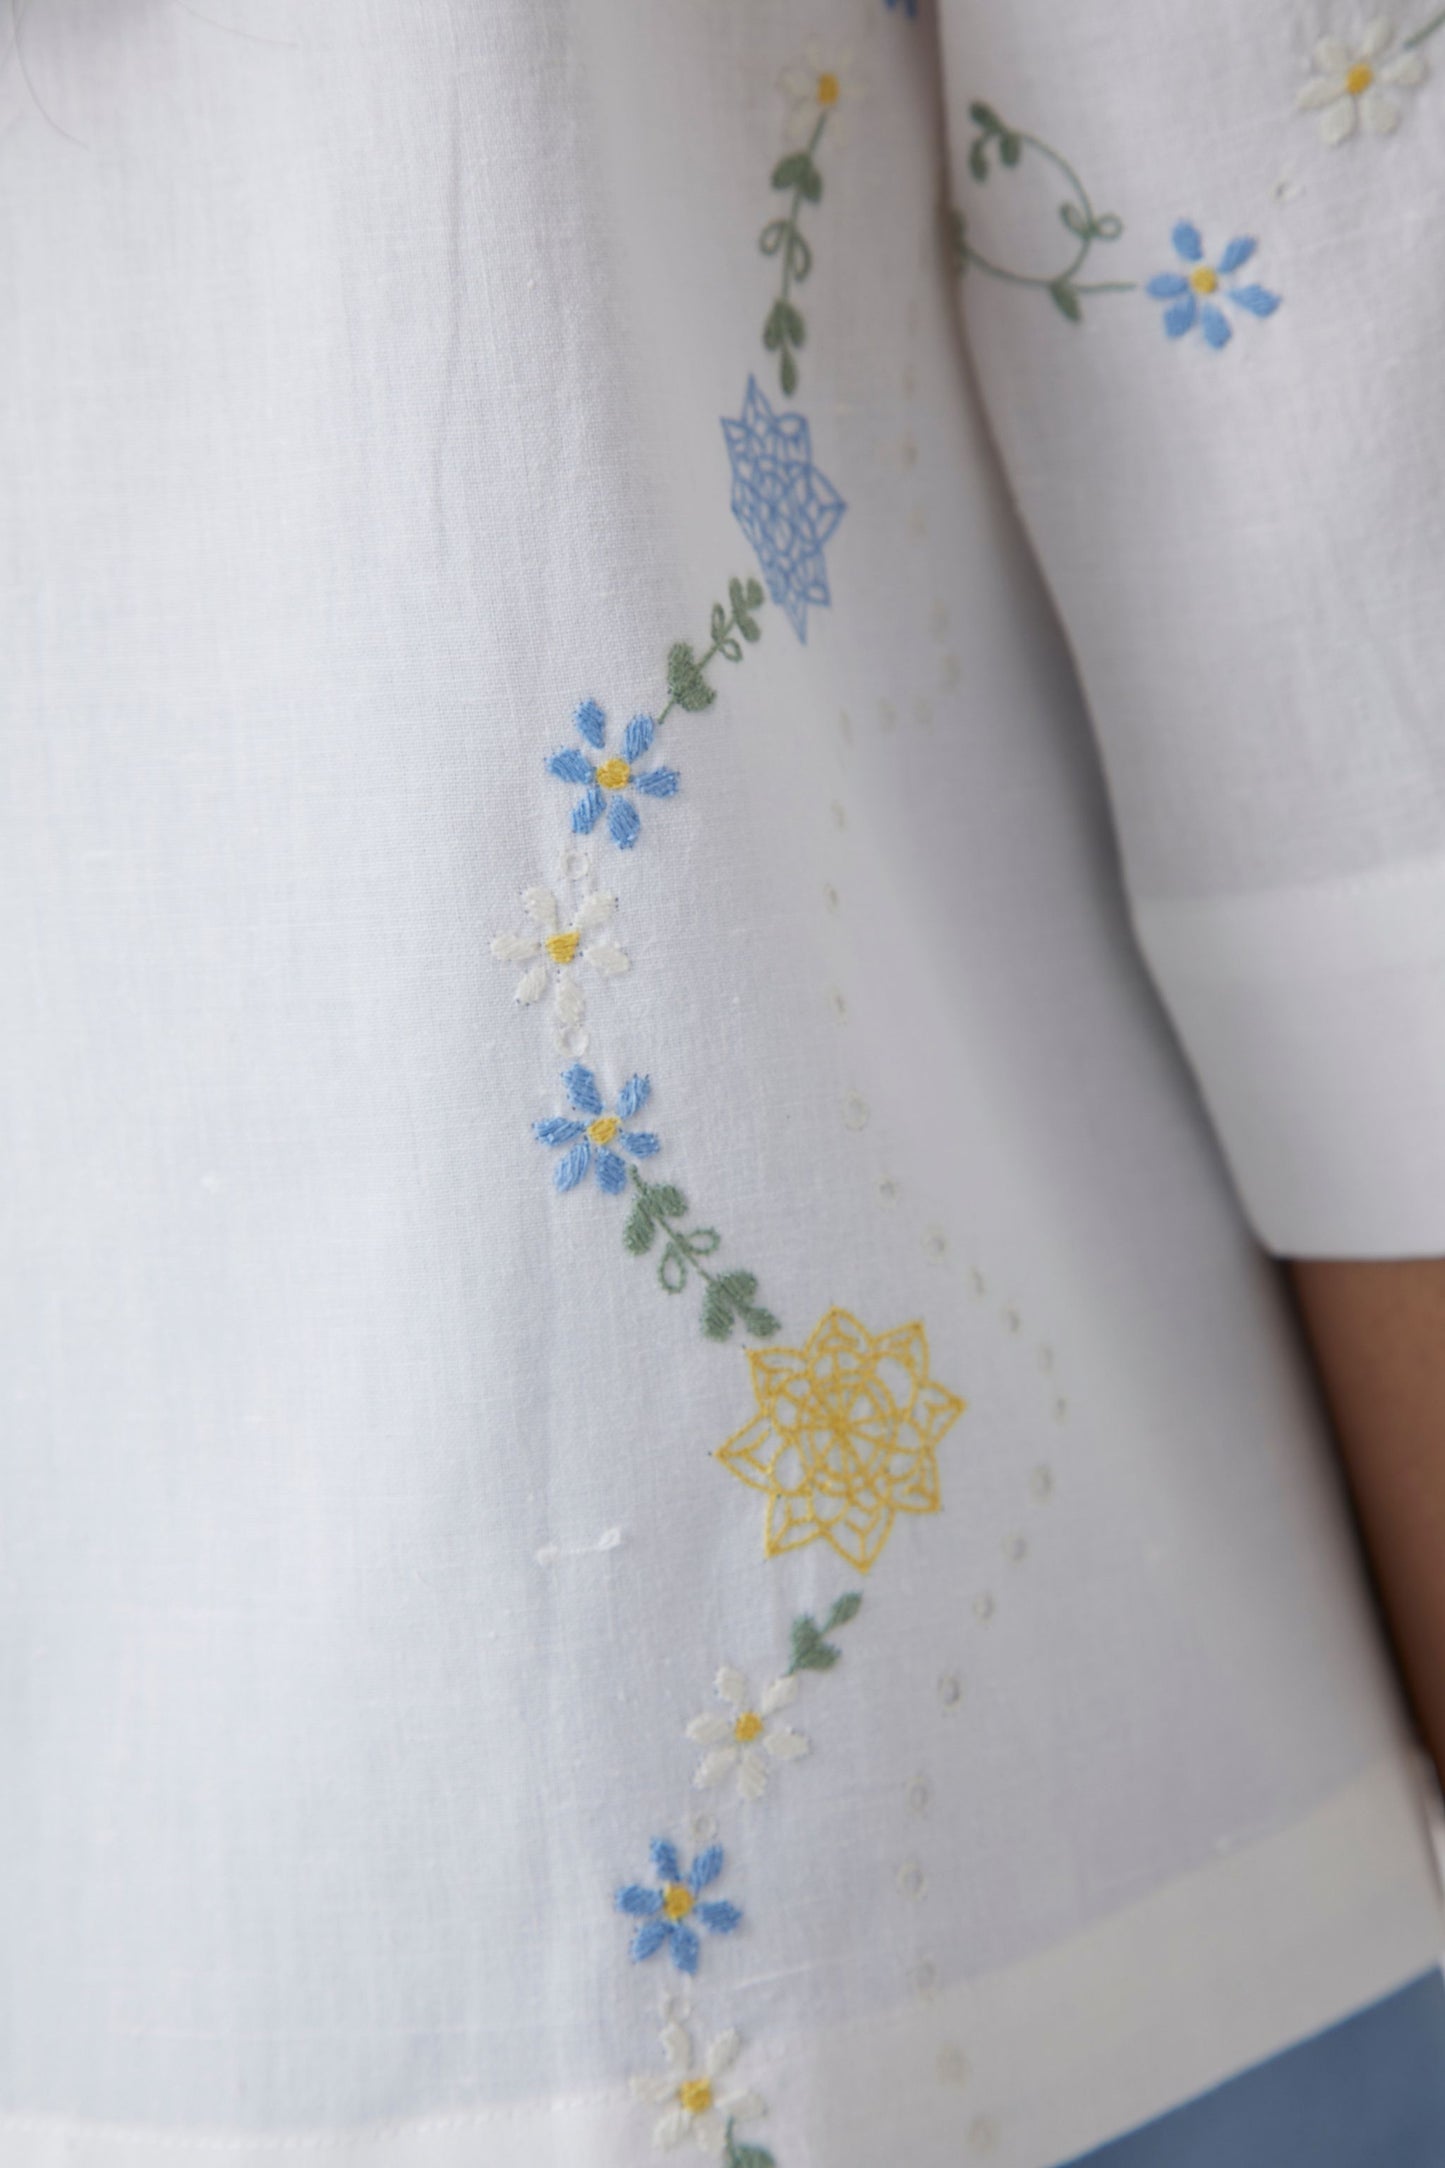 Issi hand embroidered khadi cotton shirt